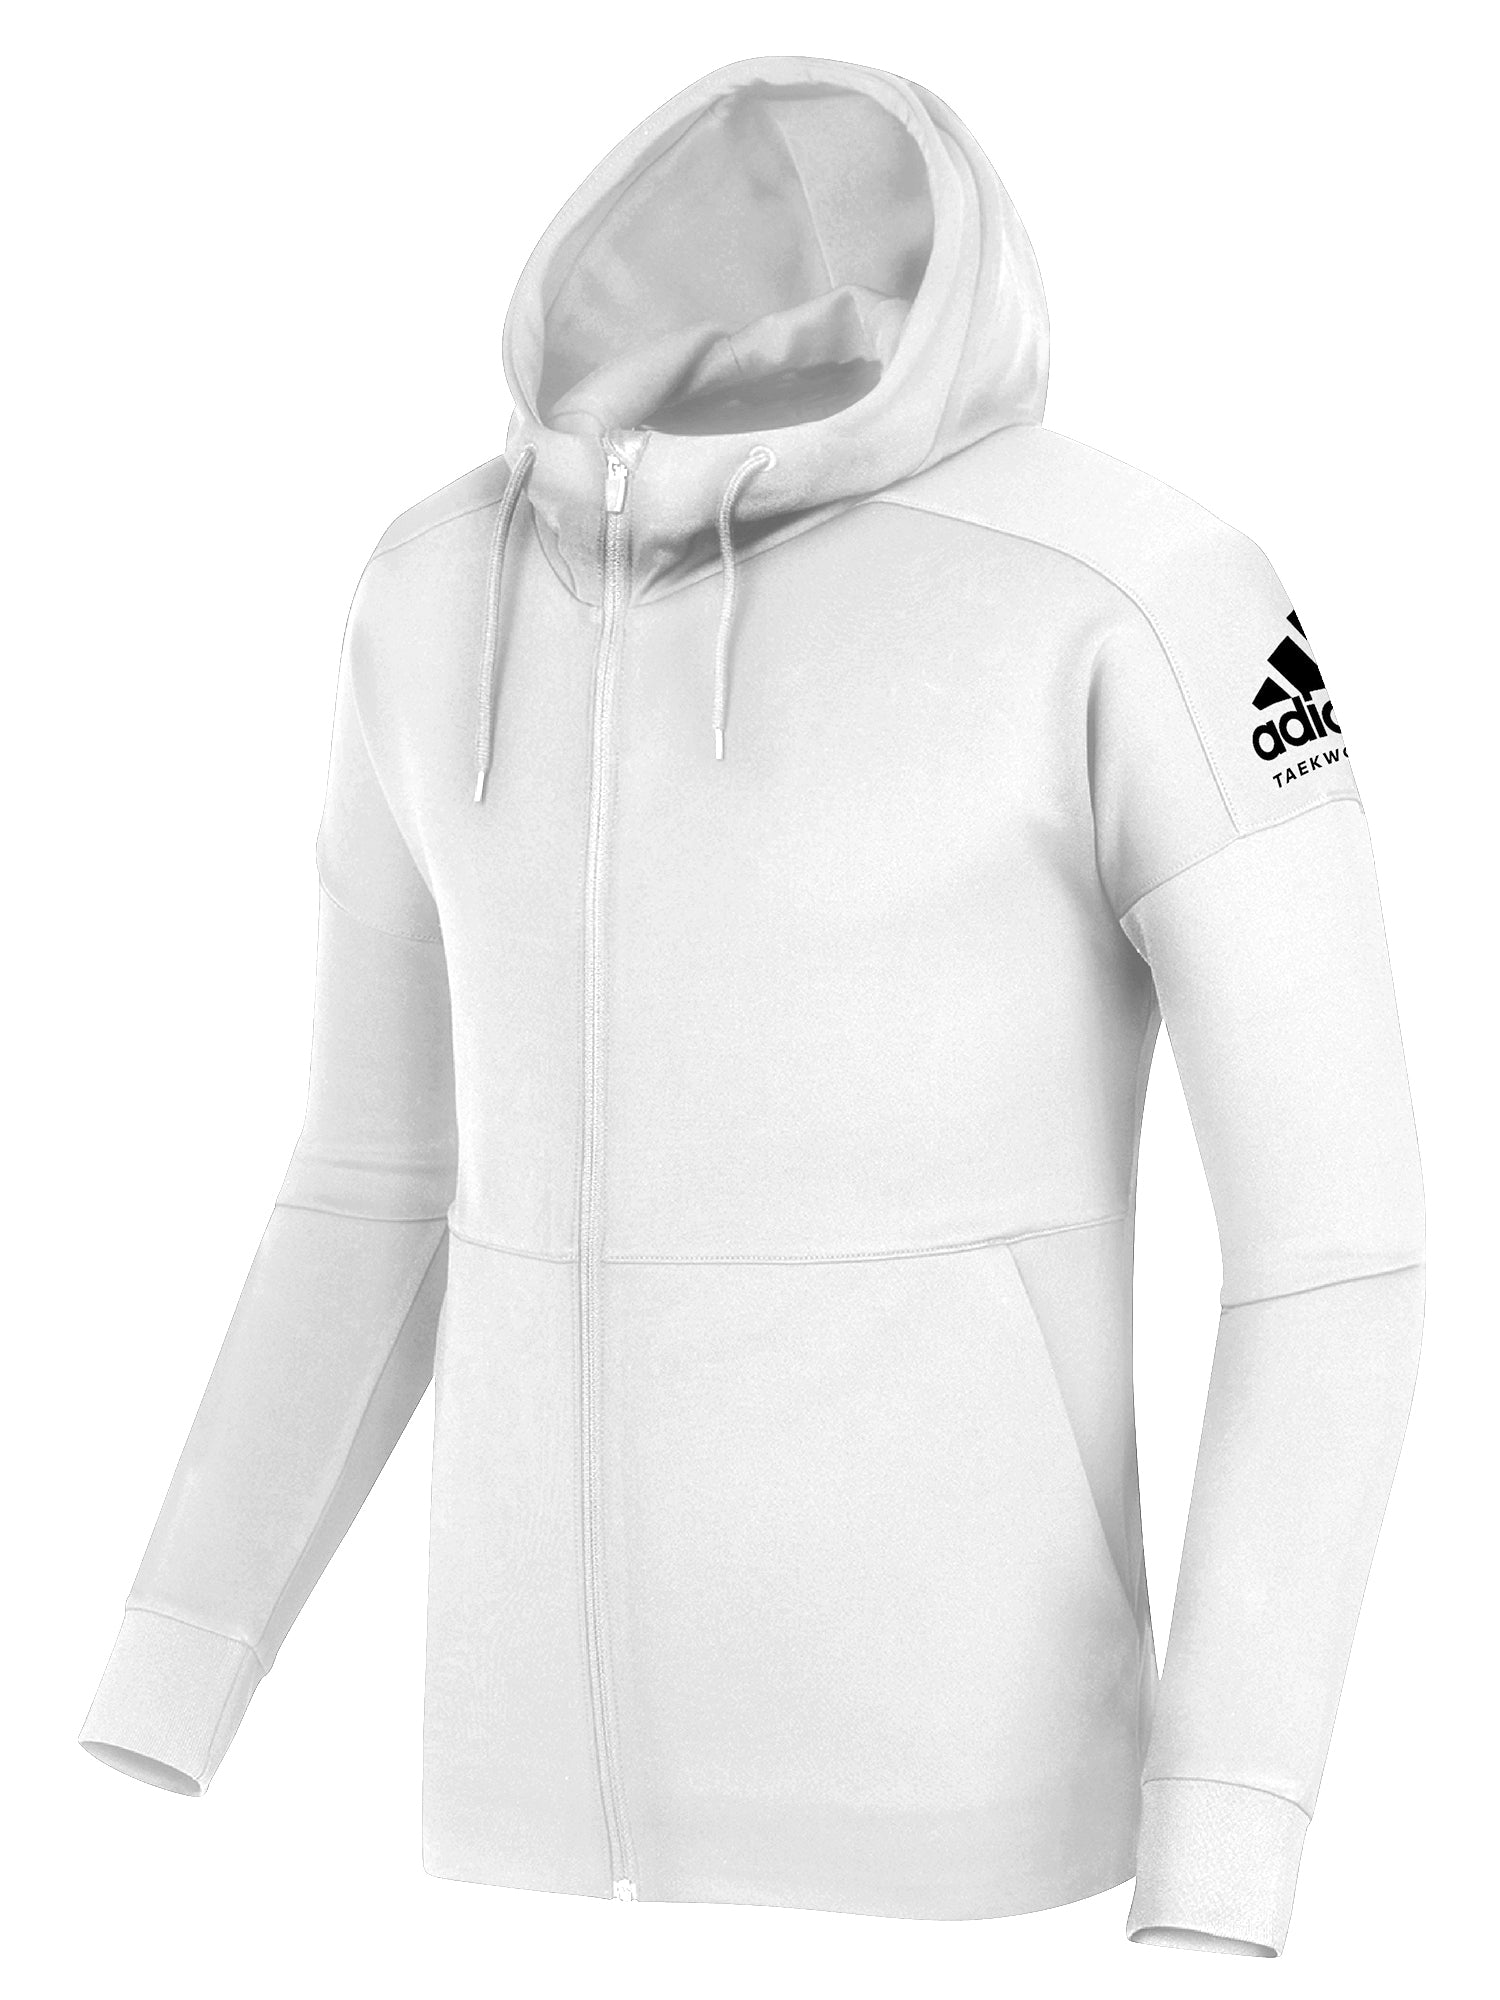 All Taekwondo Arts – Martial Lined American Full Supply adidas Fleece Sweatshirt Hooded Zipped Jacket